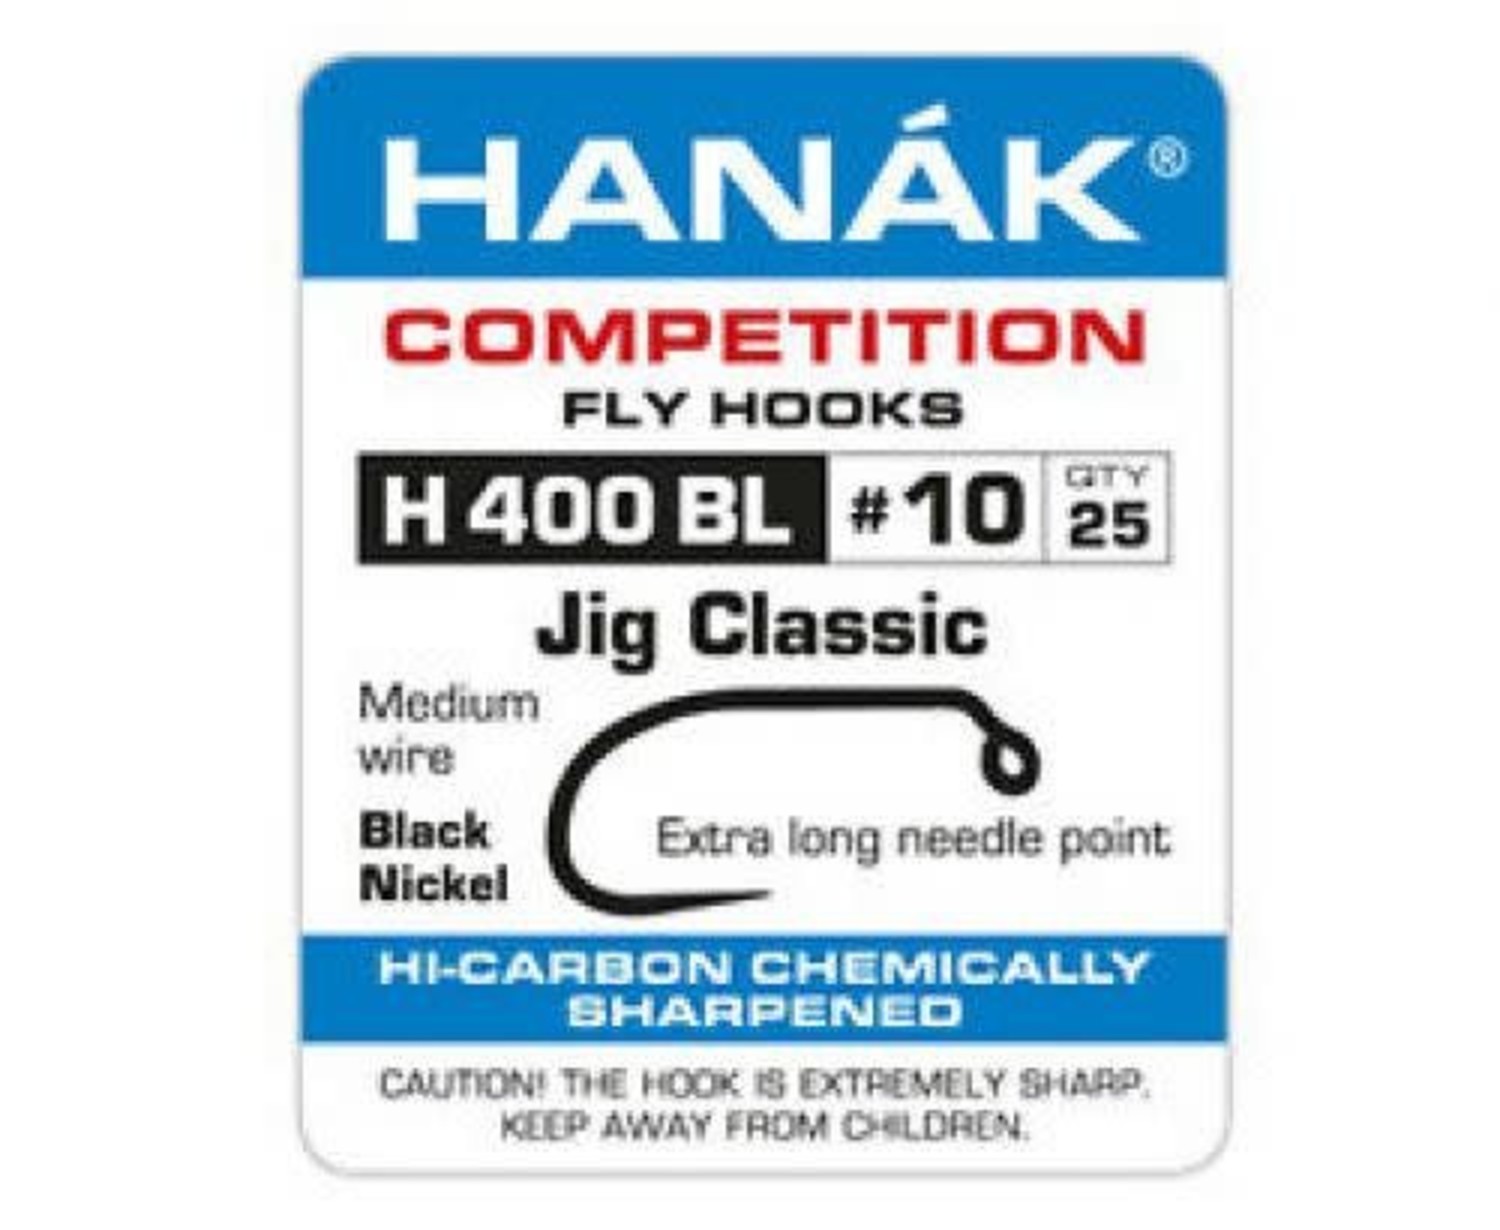 Hanak Hanak H 400 BL Classic Jig Hook